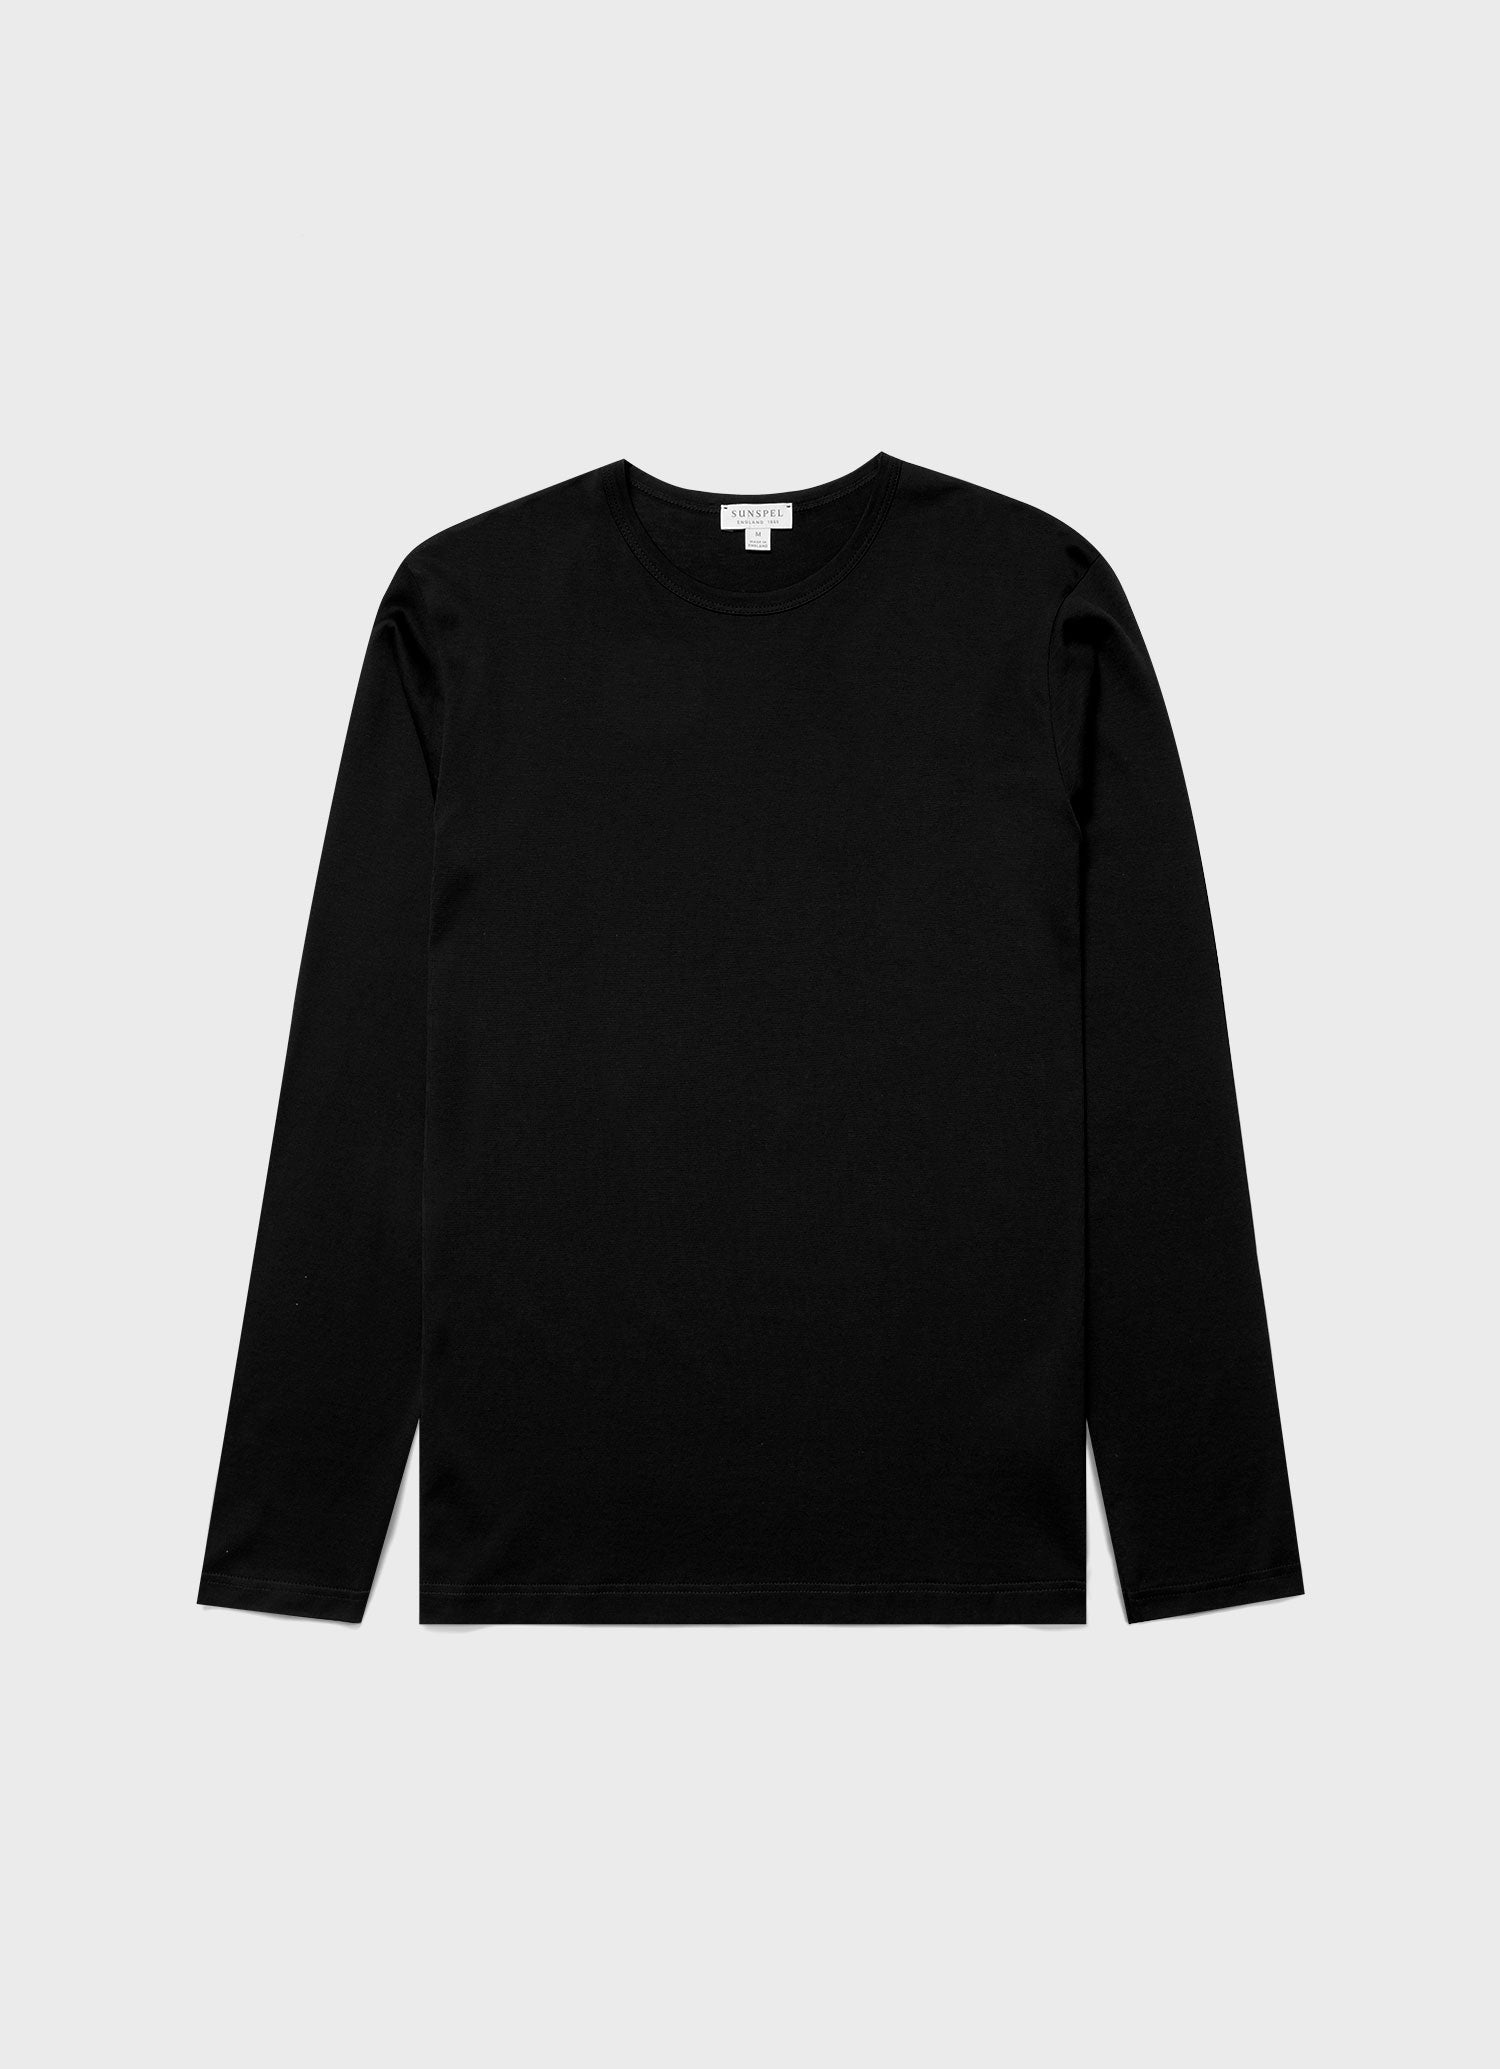 Men's Long Sleeve Classic T-shirt in Black | Sunspel